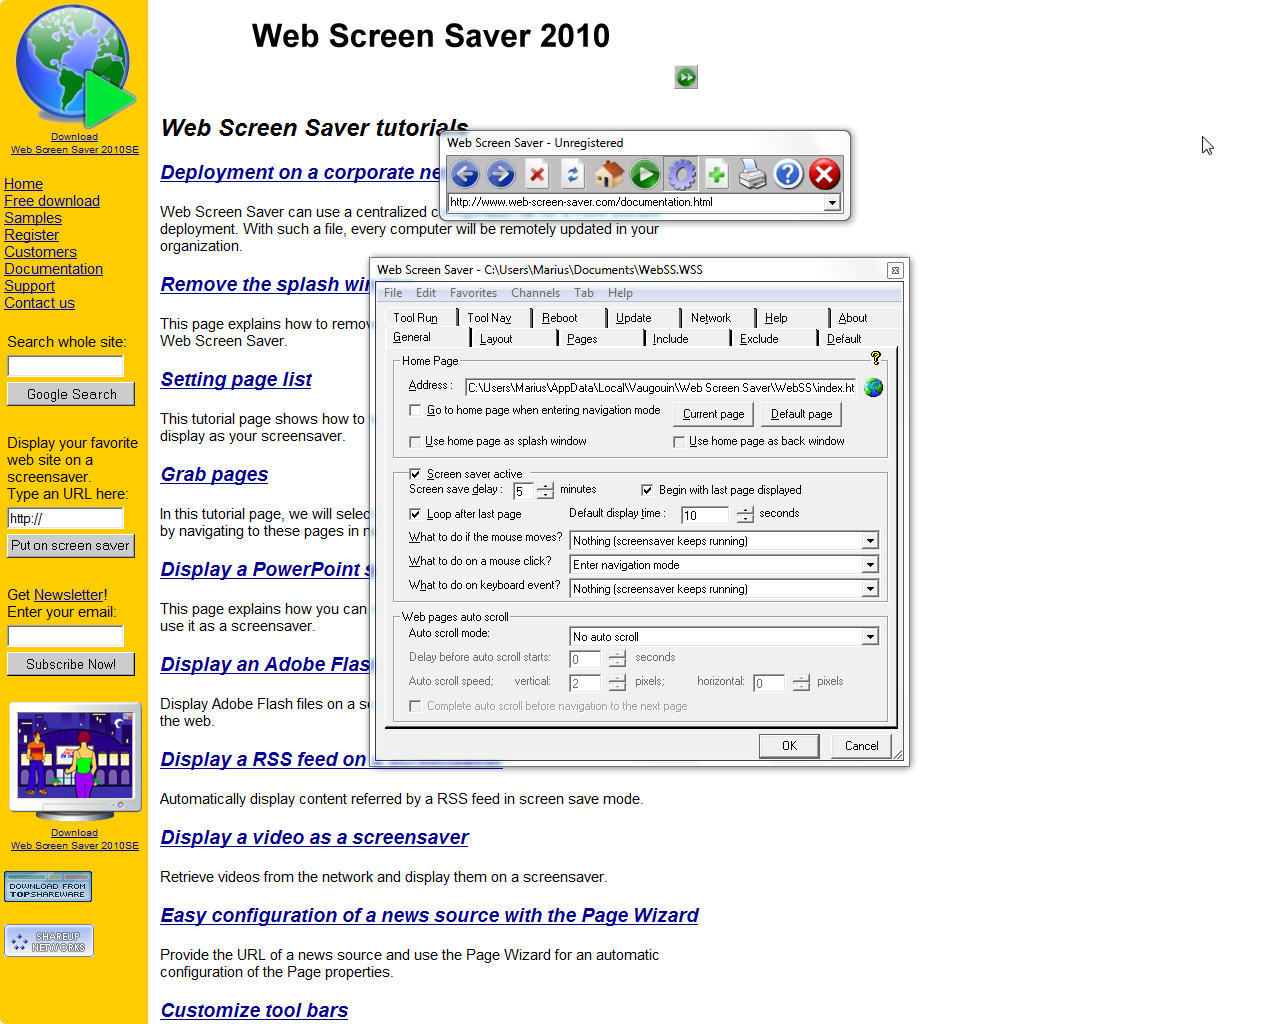 Web Screen Saver 5.6 : Main window